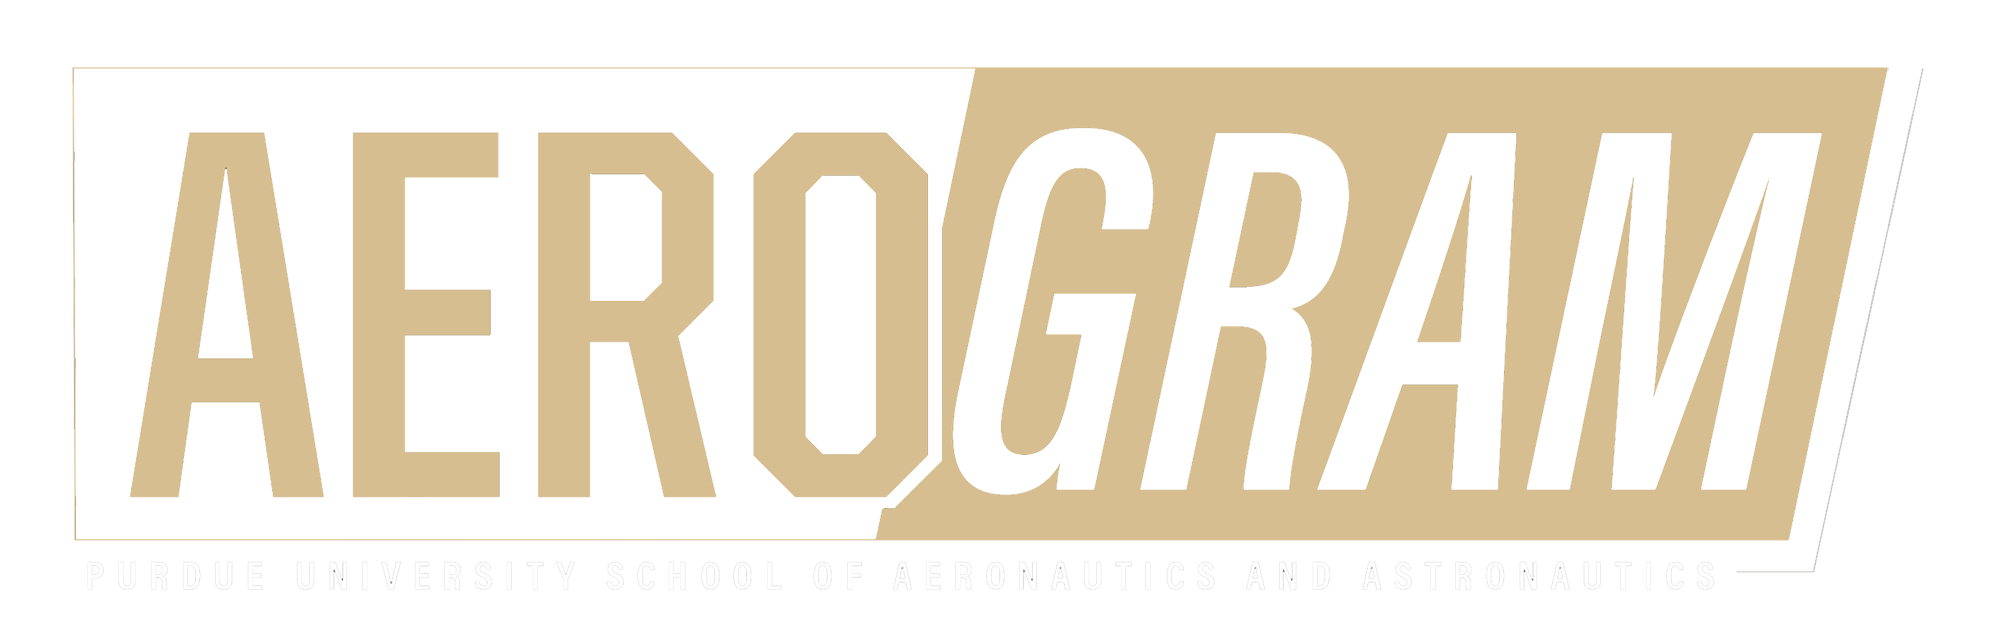 Online edition of the Aerogram magazine.